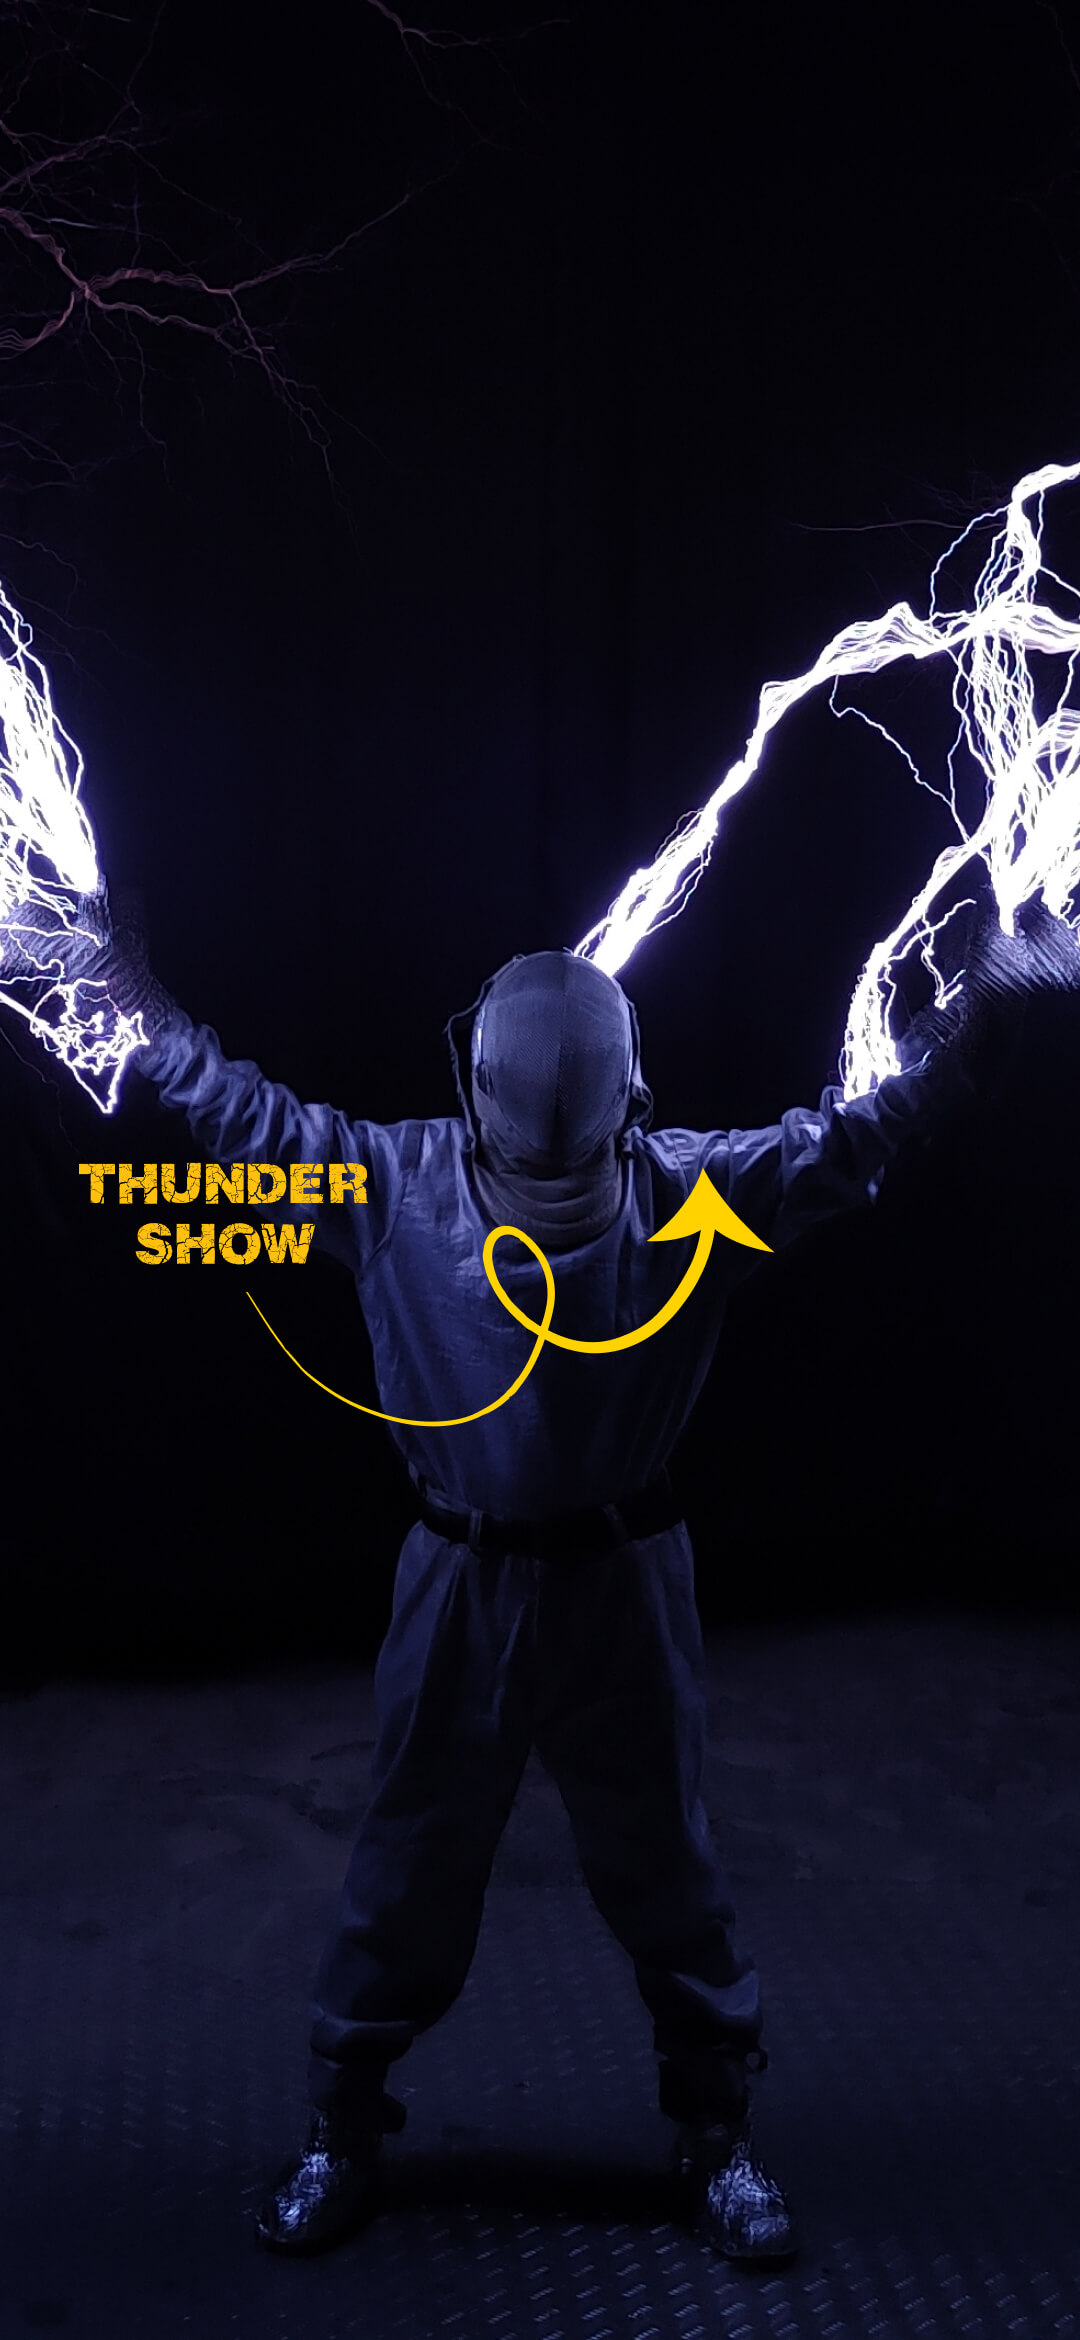 Thunder-world-goa